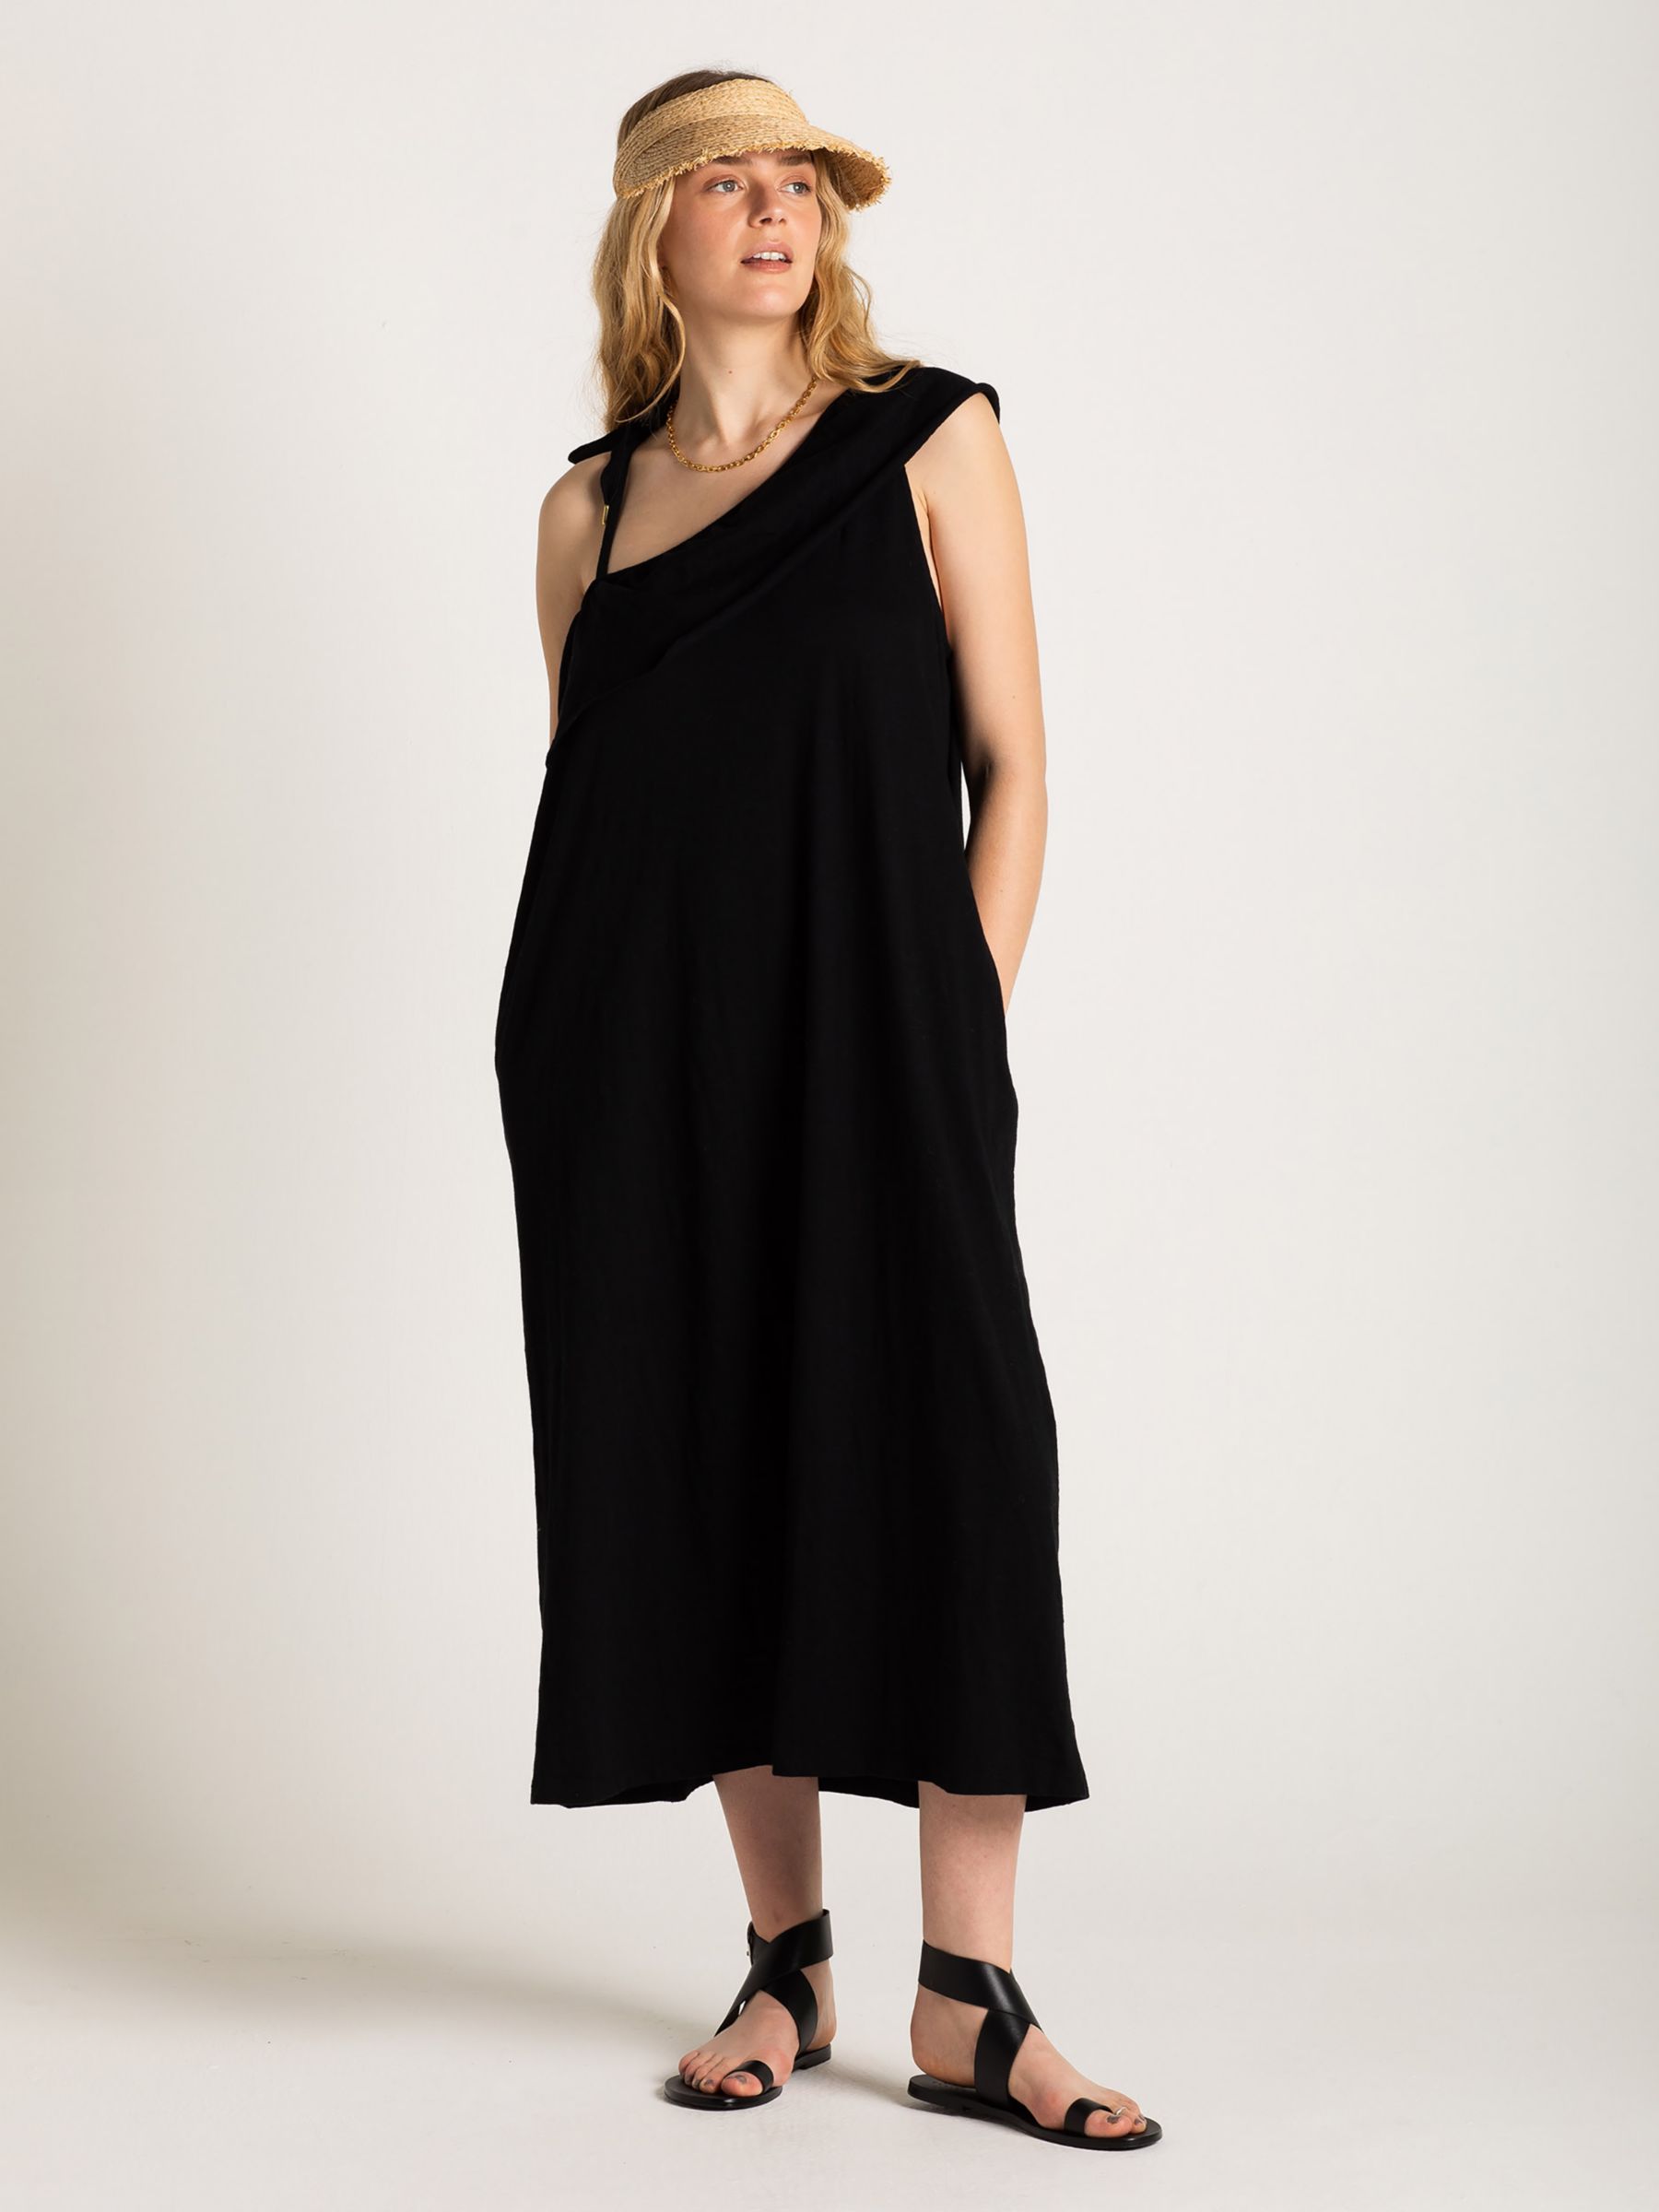 Cape Cove Dove Asymmetric Dress, Black at John Lewis & Partners